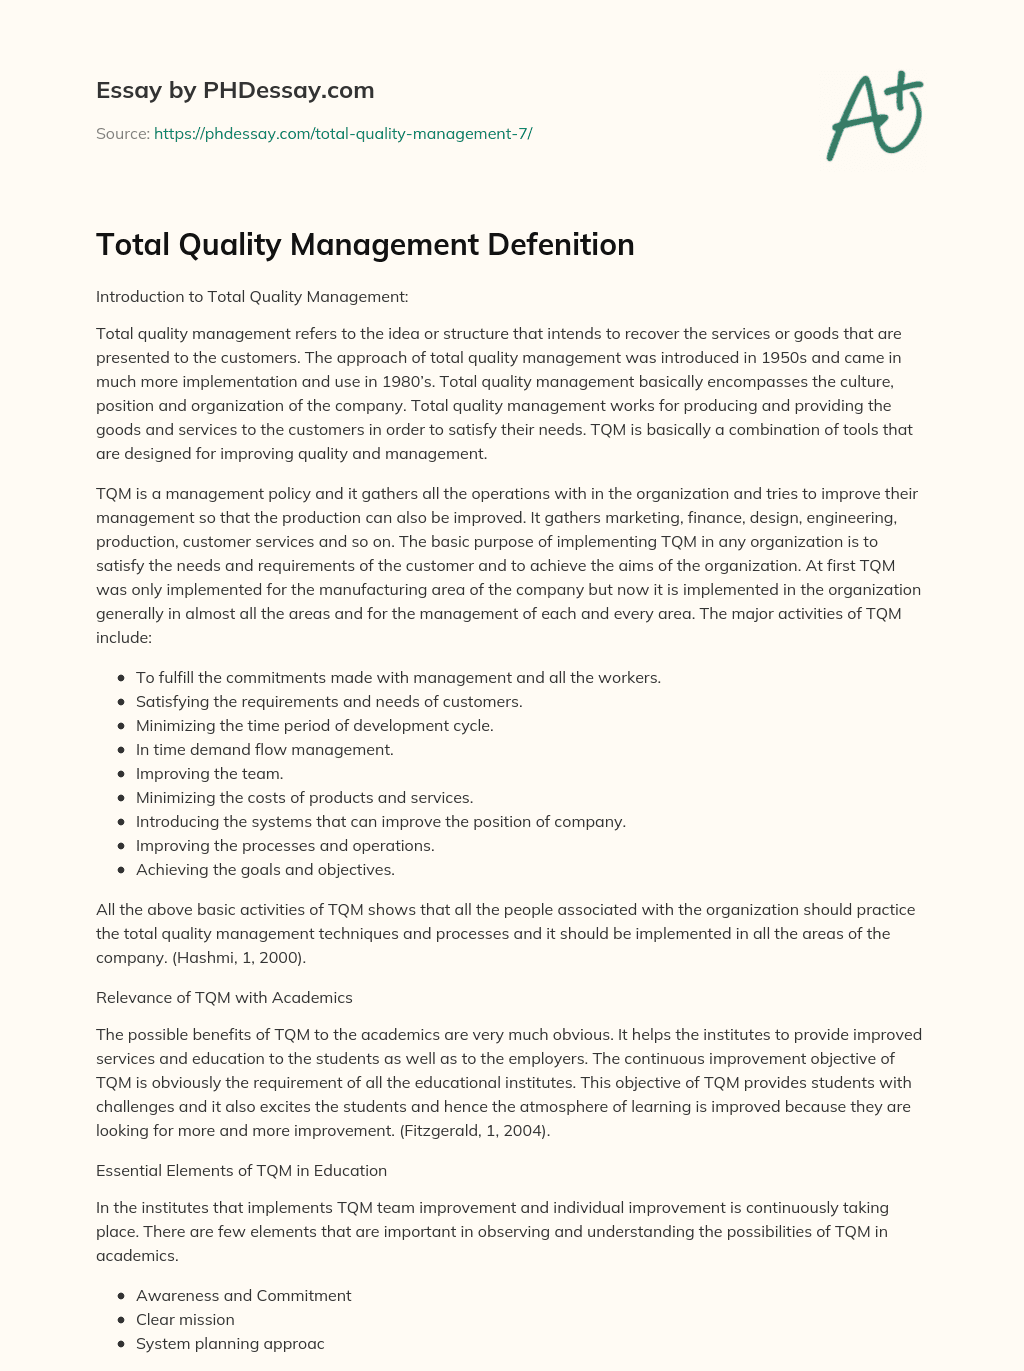 Total Quality Management Defenition essay